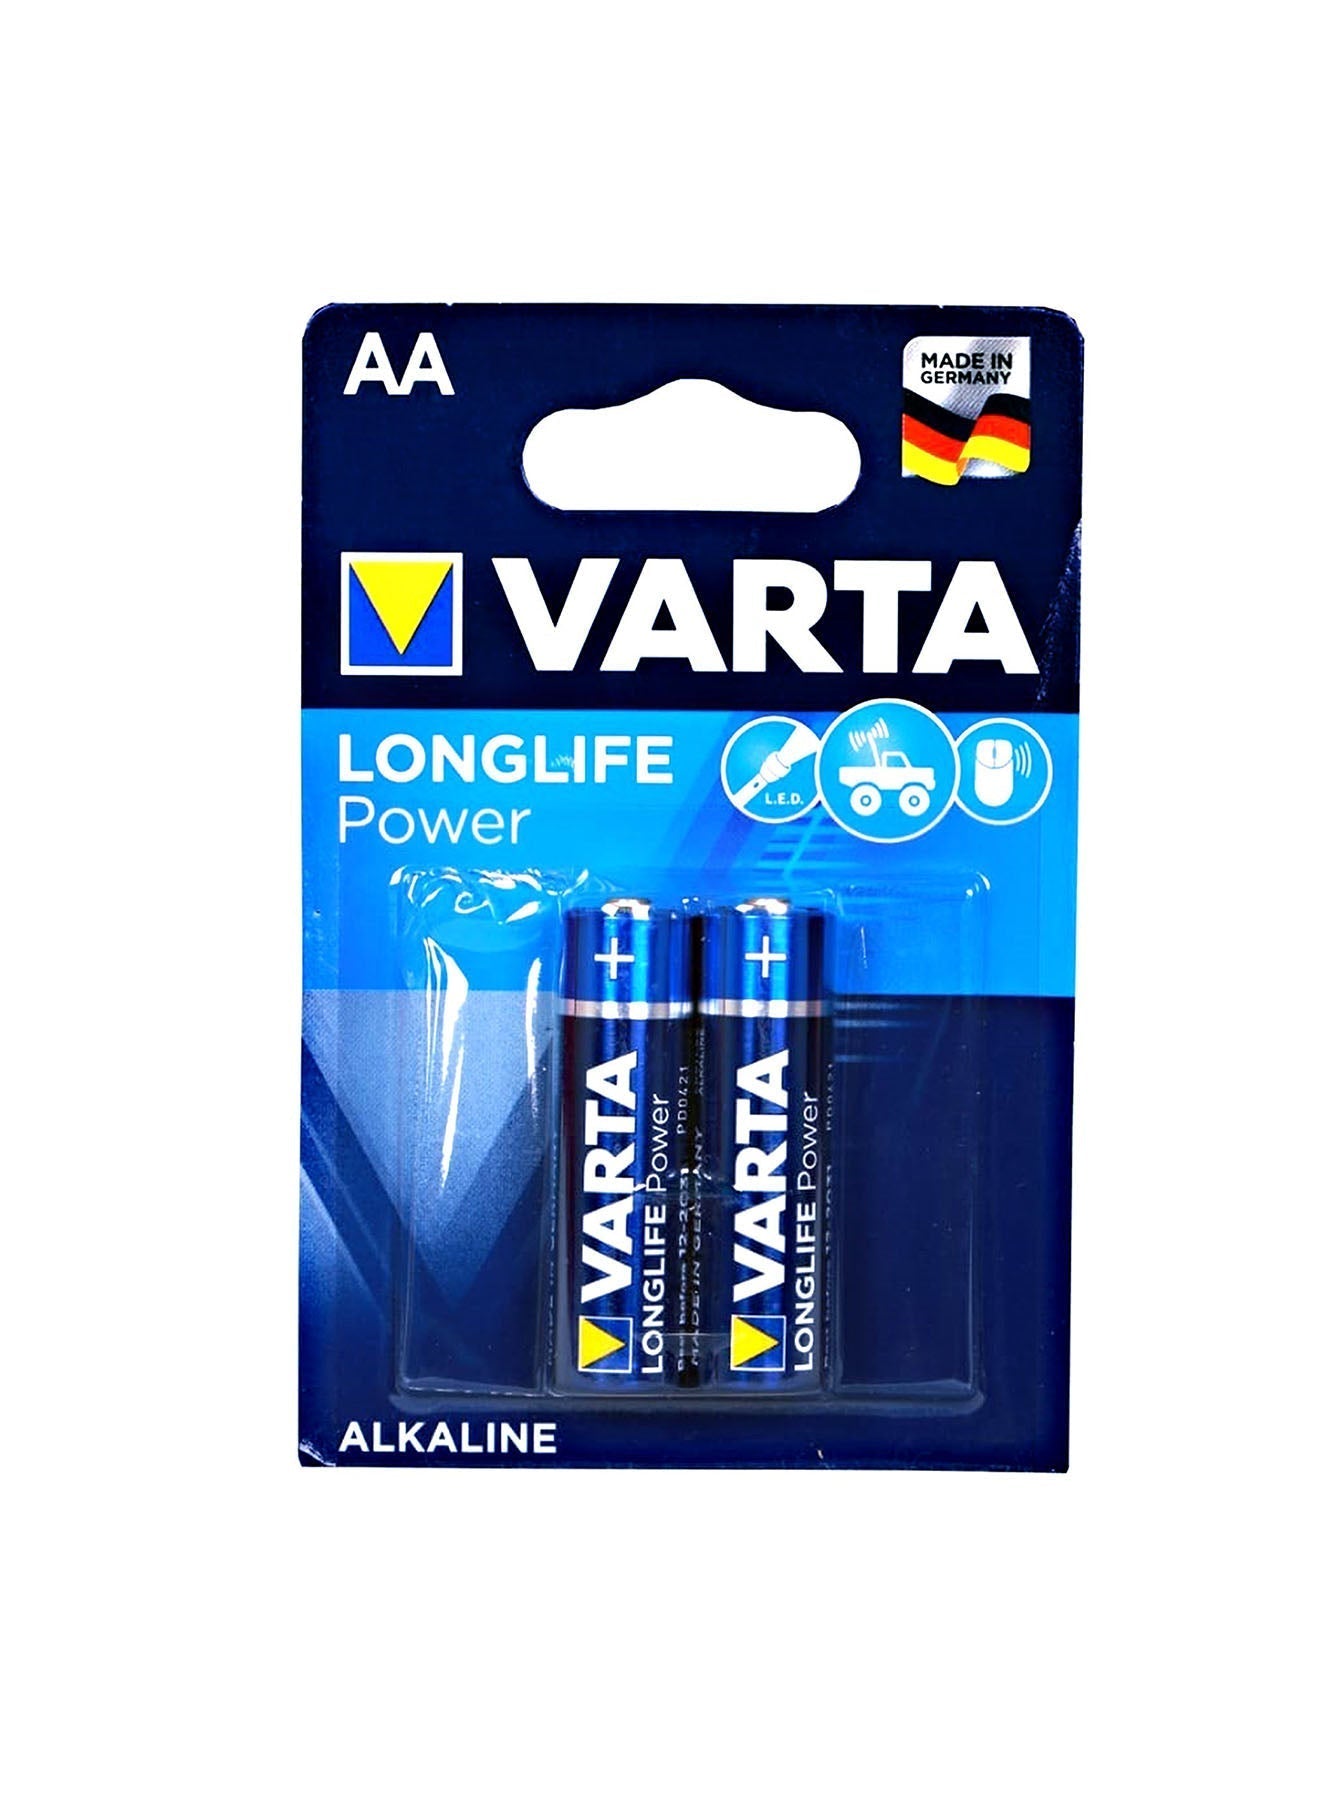 Varta Long Life Power AA Alkaline 2 units Value Pack of 4 